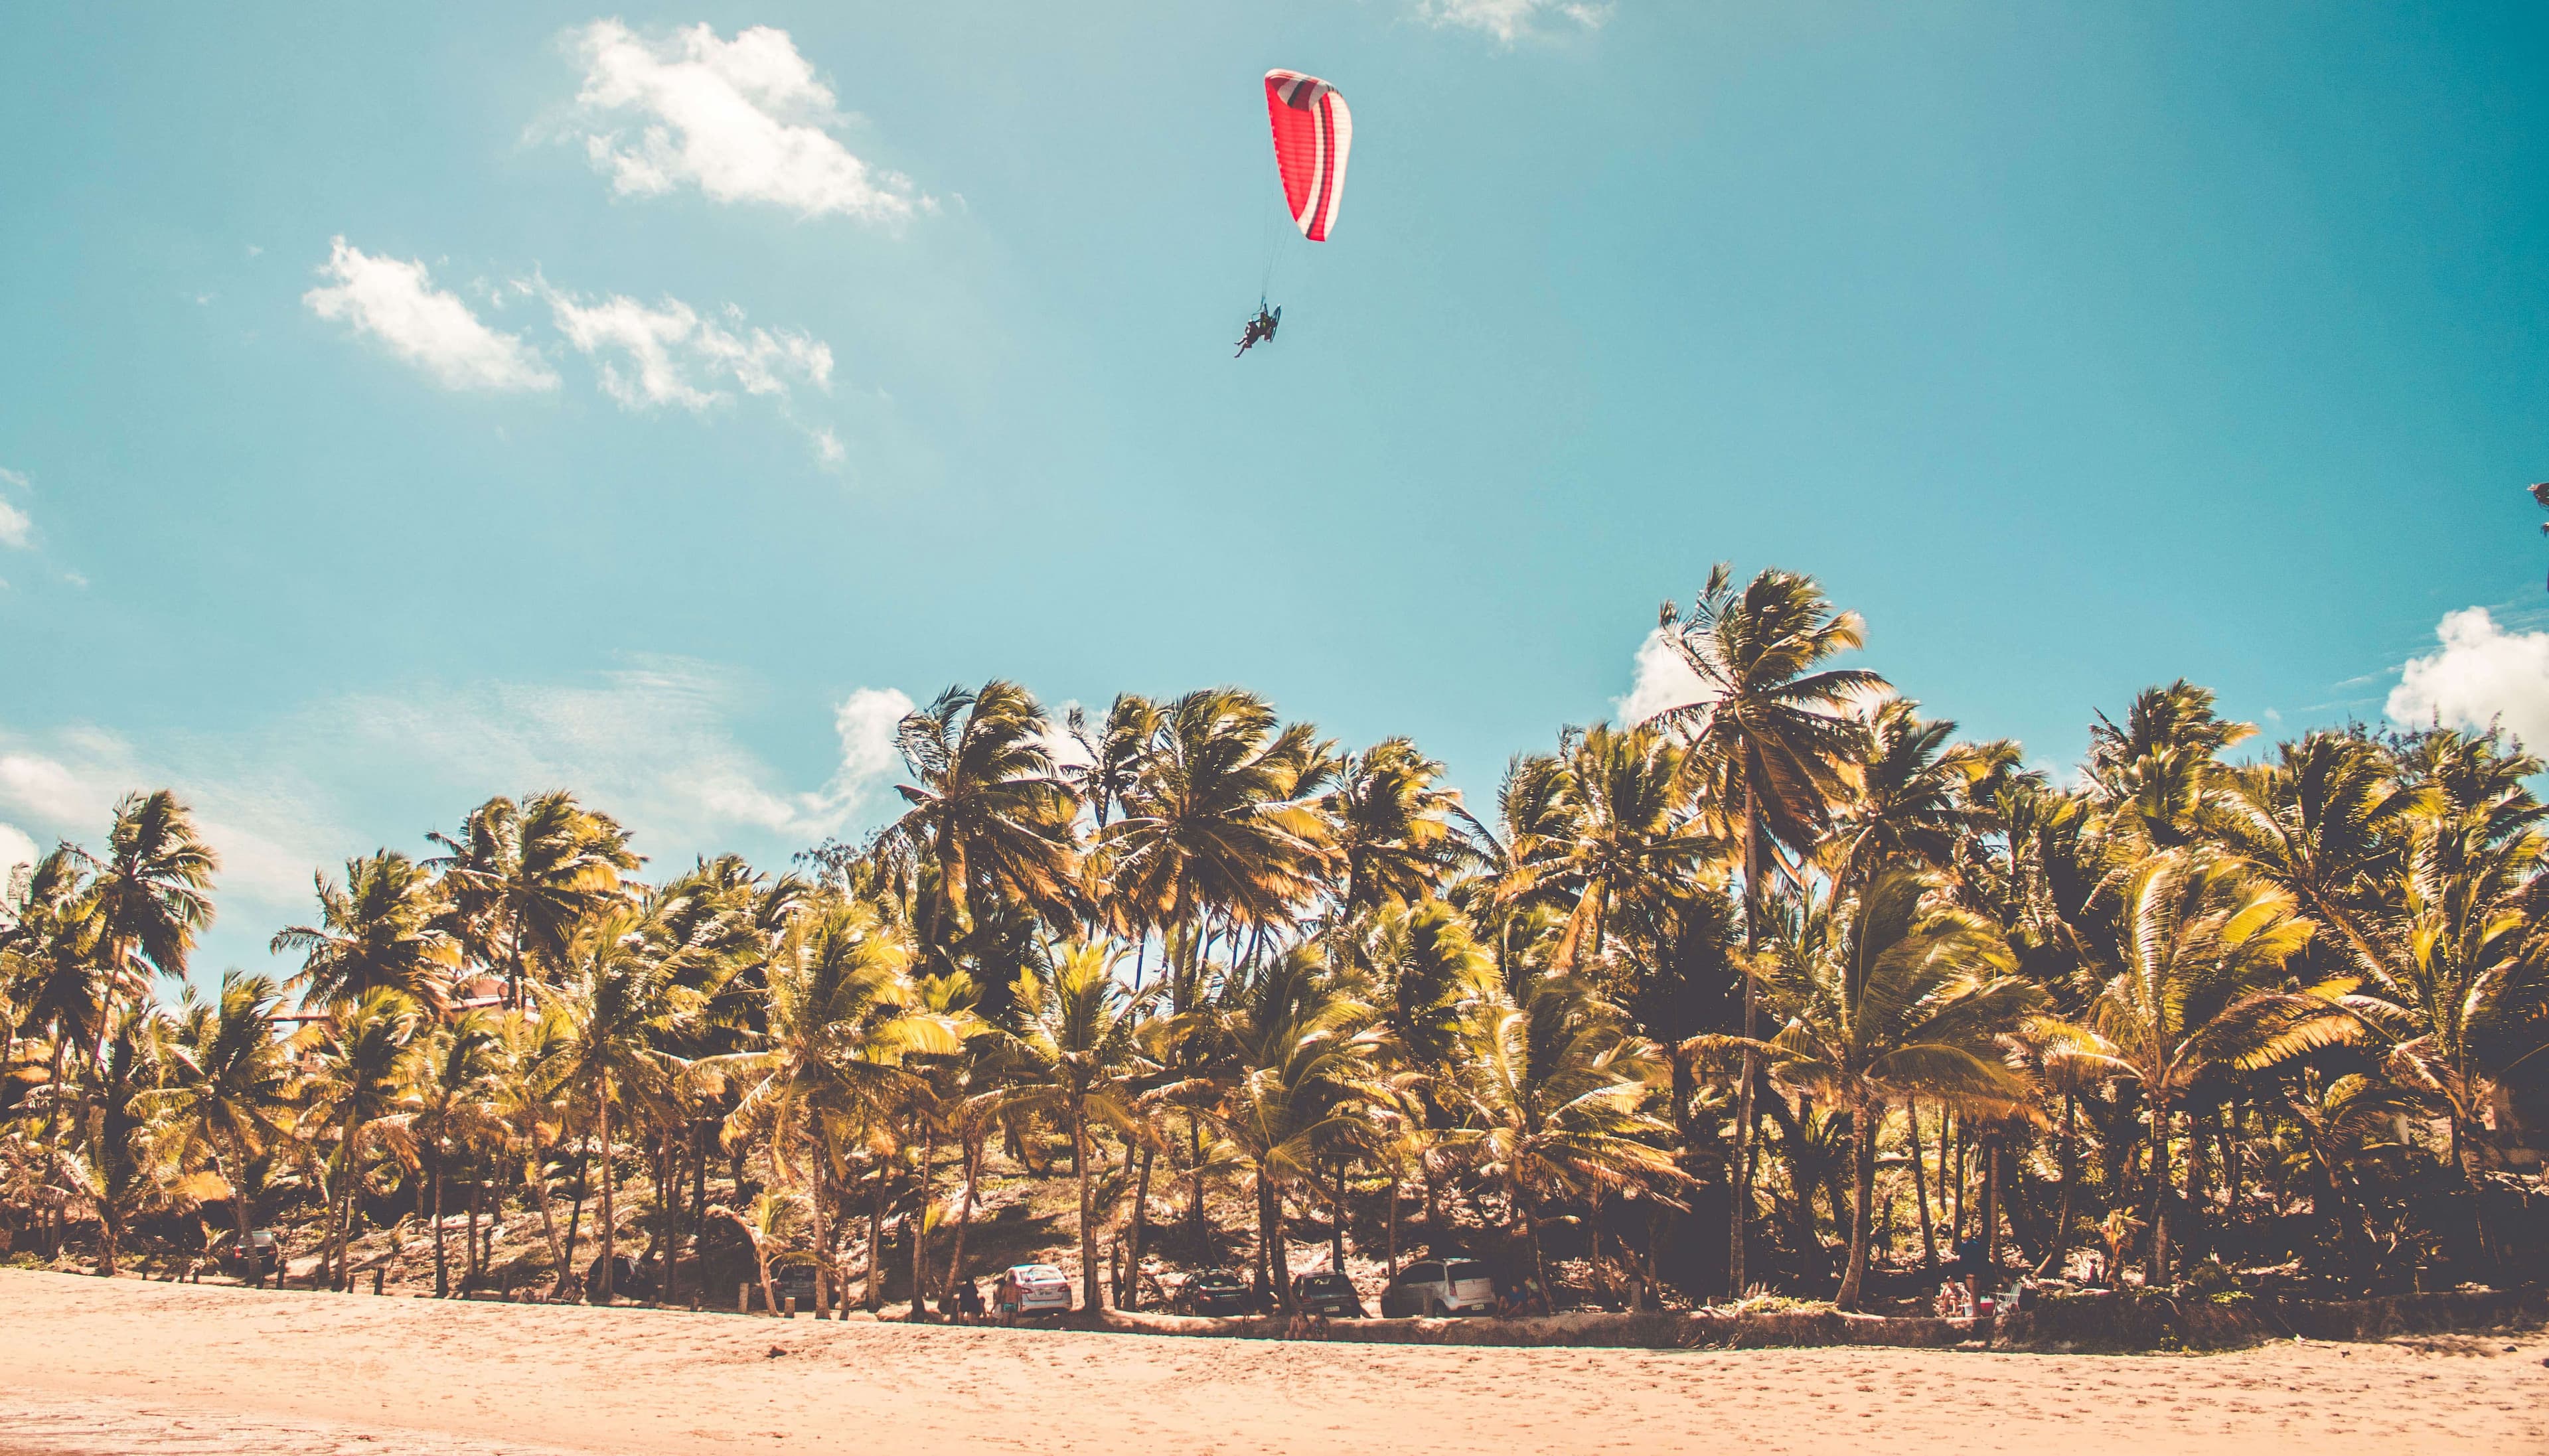 Paraglider flying over the beach in bright sunny day in Bentota Sri Lanka